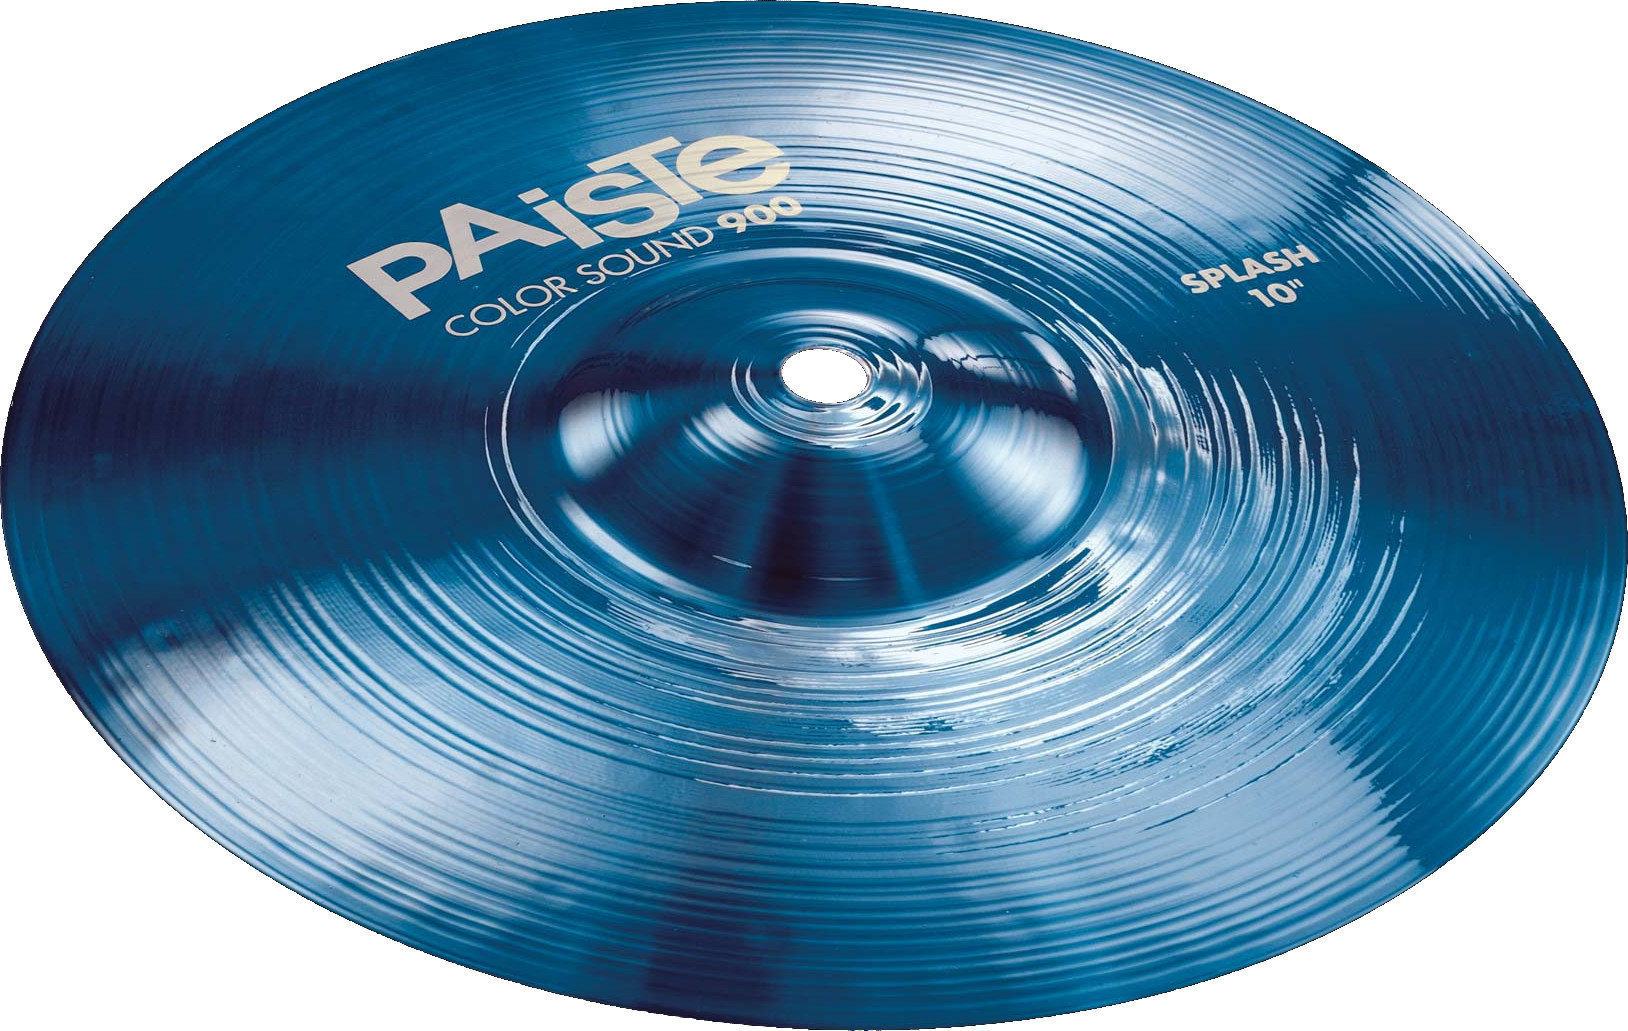 Splash Cymbal Paiste Color Sound 900 Splash Cymbal 10" Blue